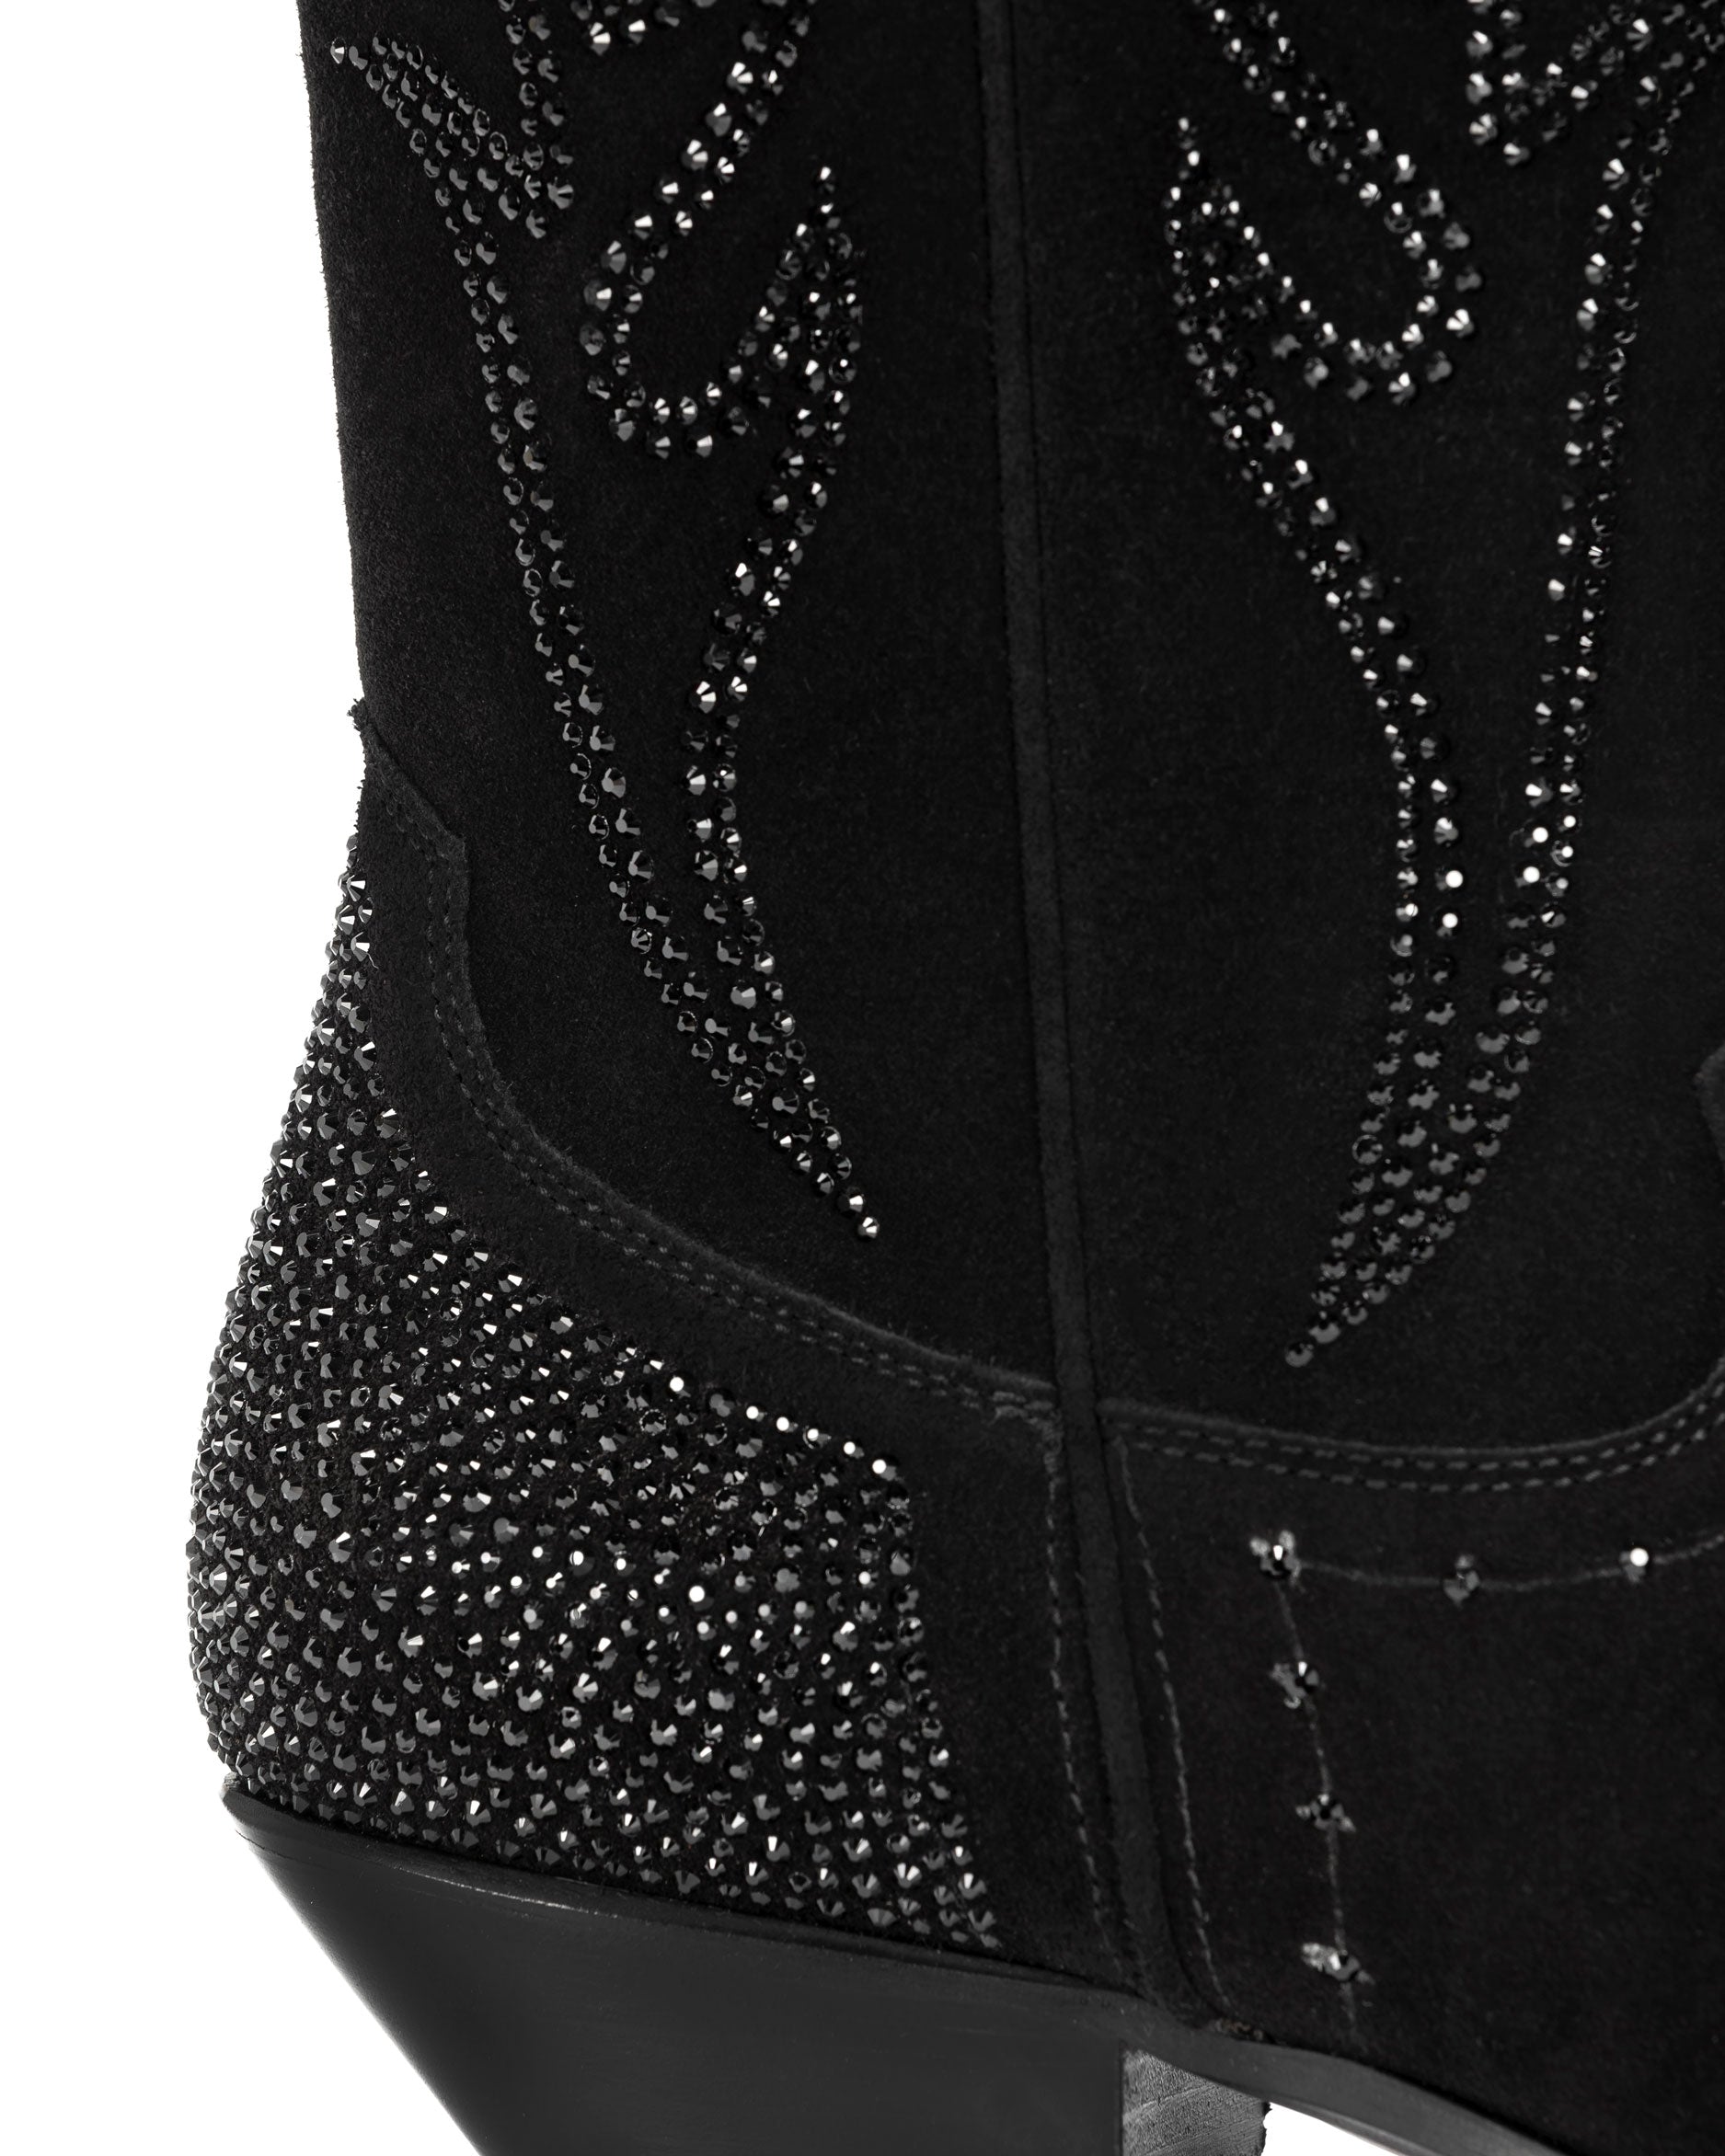    SANTA-FE-Women_s-Cowboy-Boots-in-Black-Suede-with-Black-Swarovski-Crystals_03_Detail